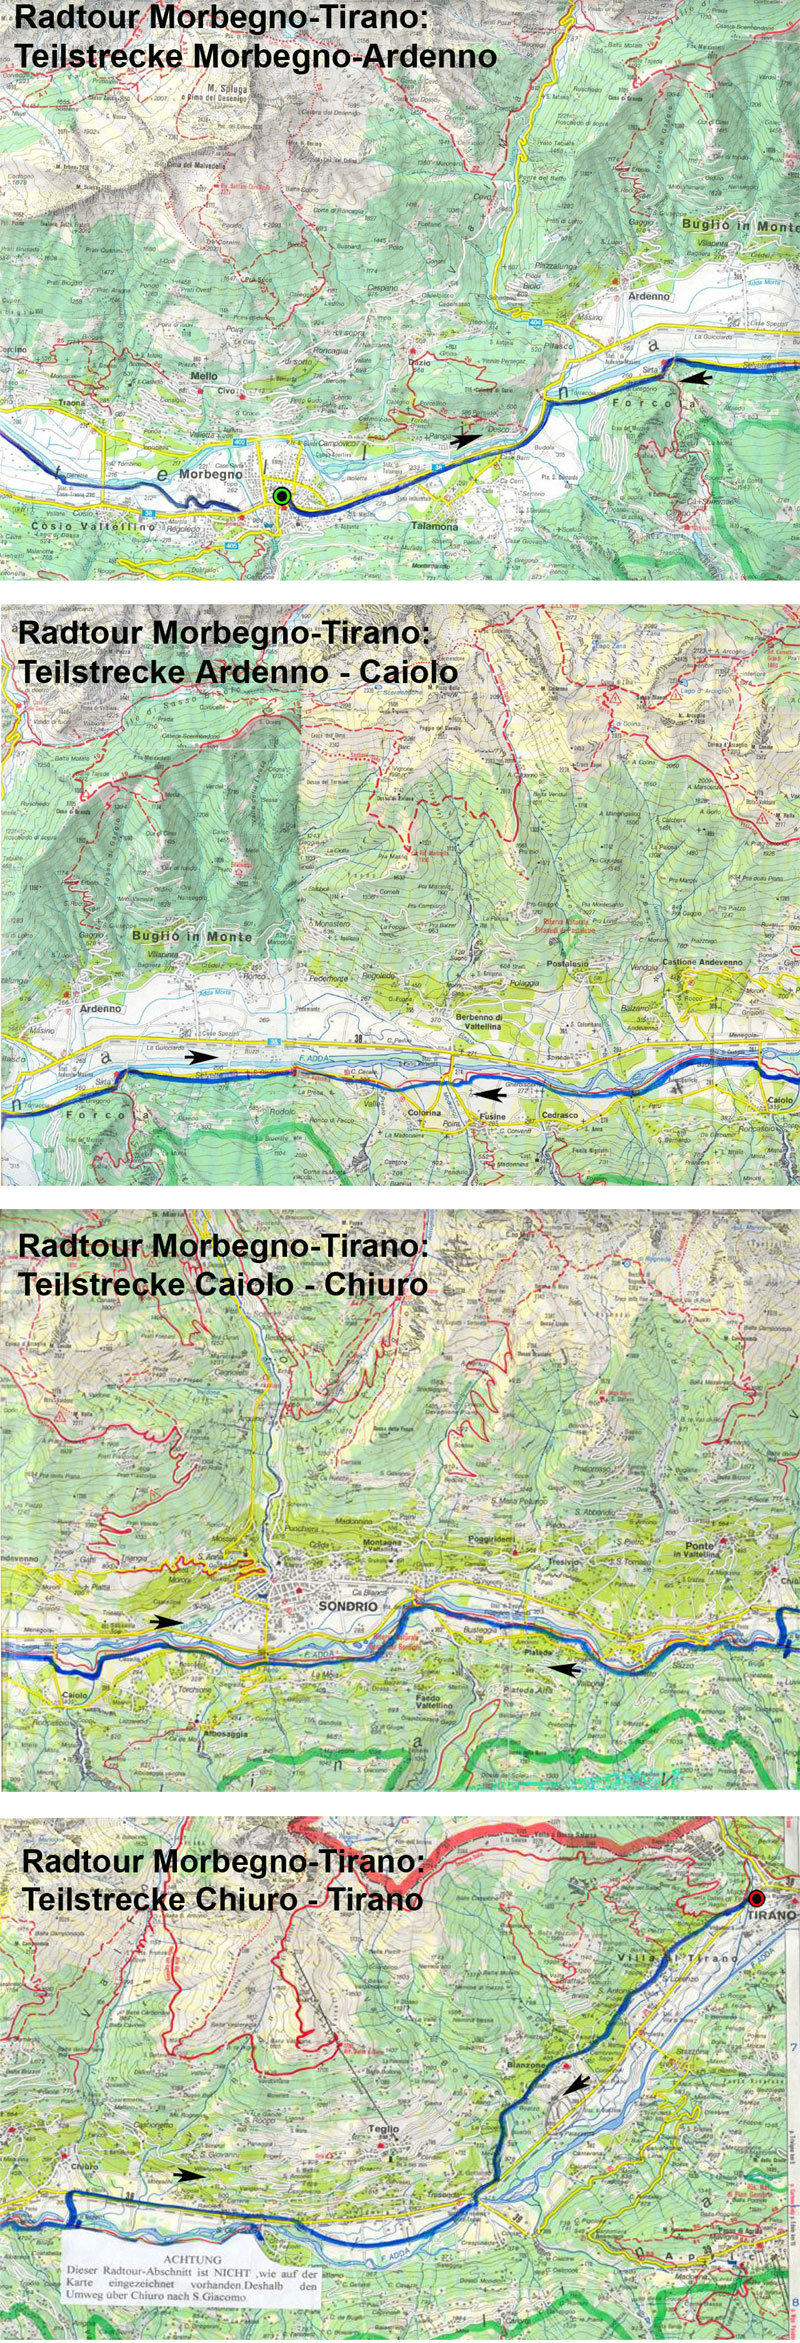 05_Activity_Morbegno nach Tirano